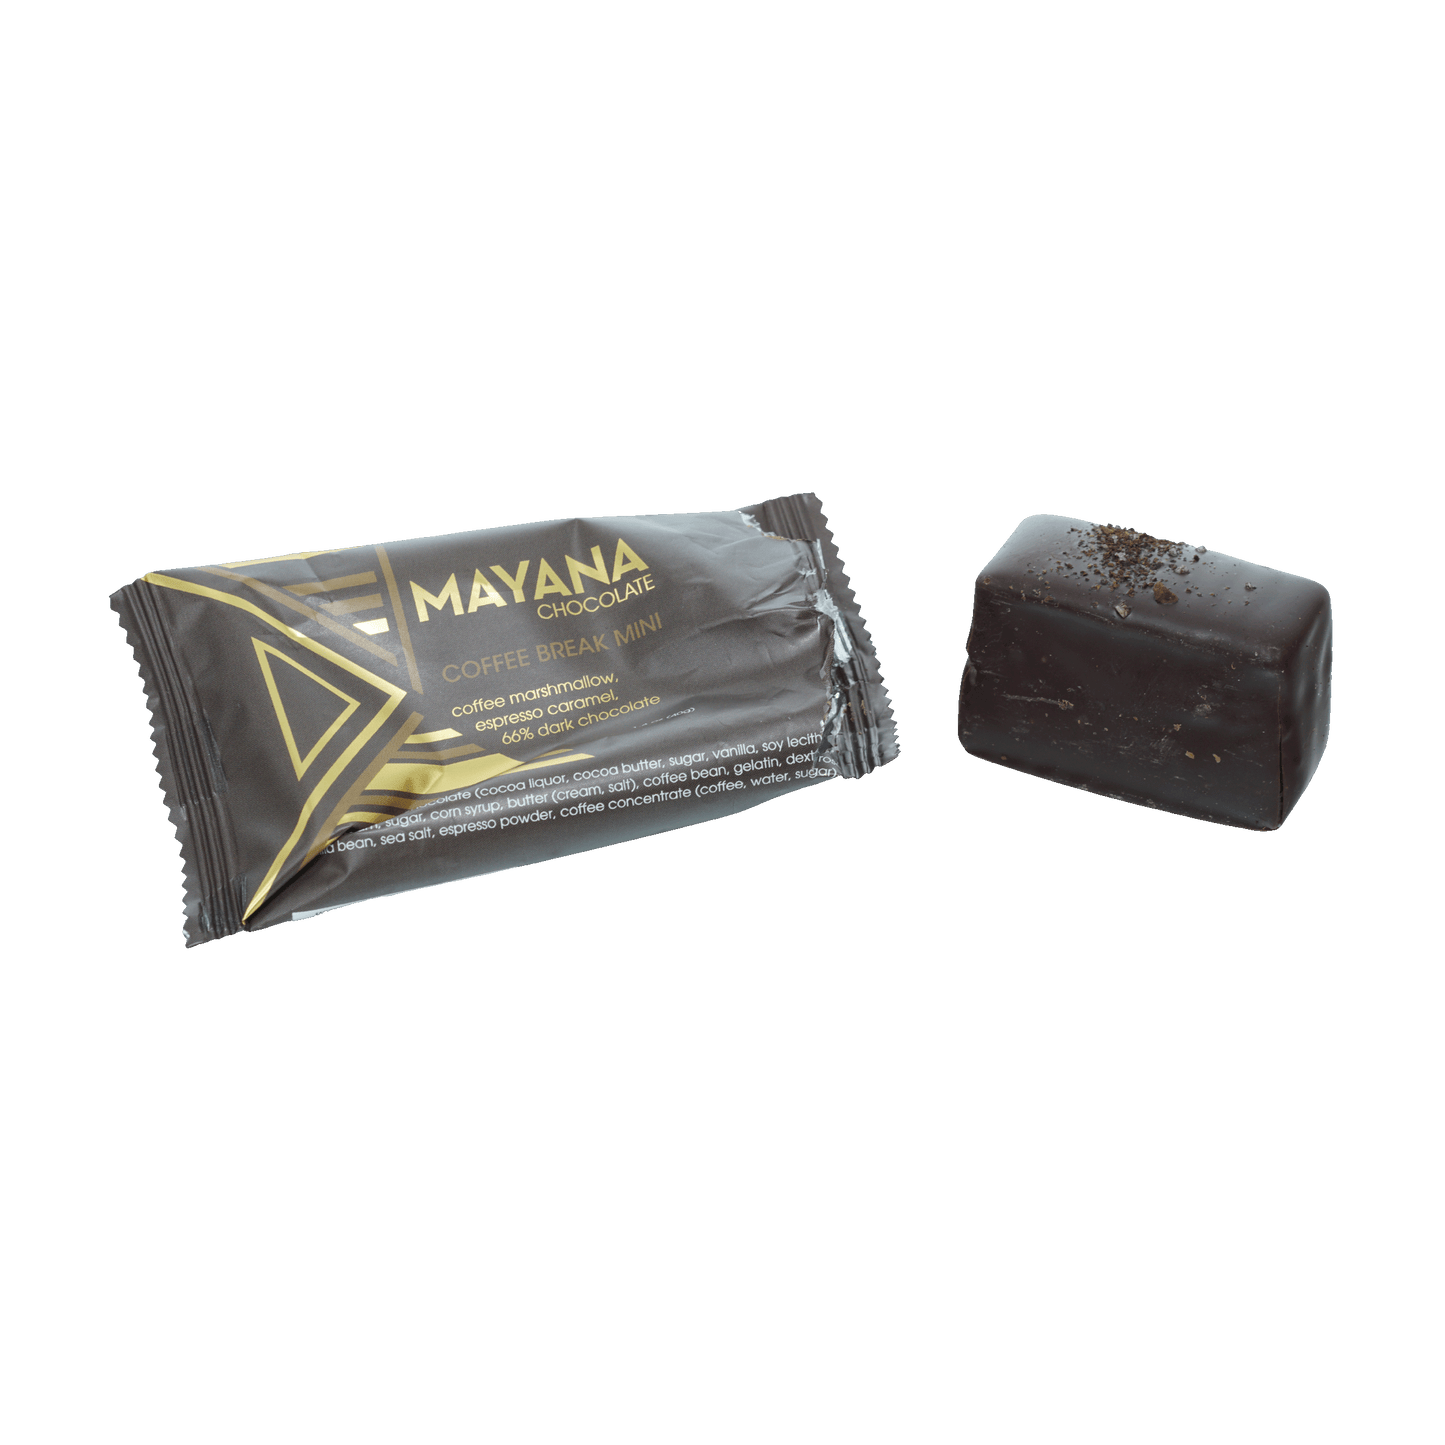 Mayana Chocolate Mini Coffee Break Bar